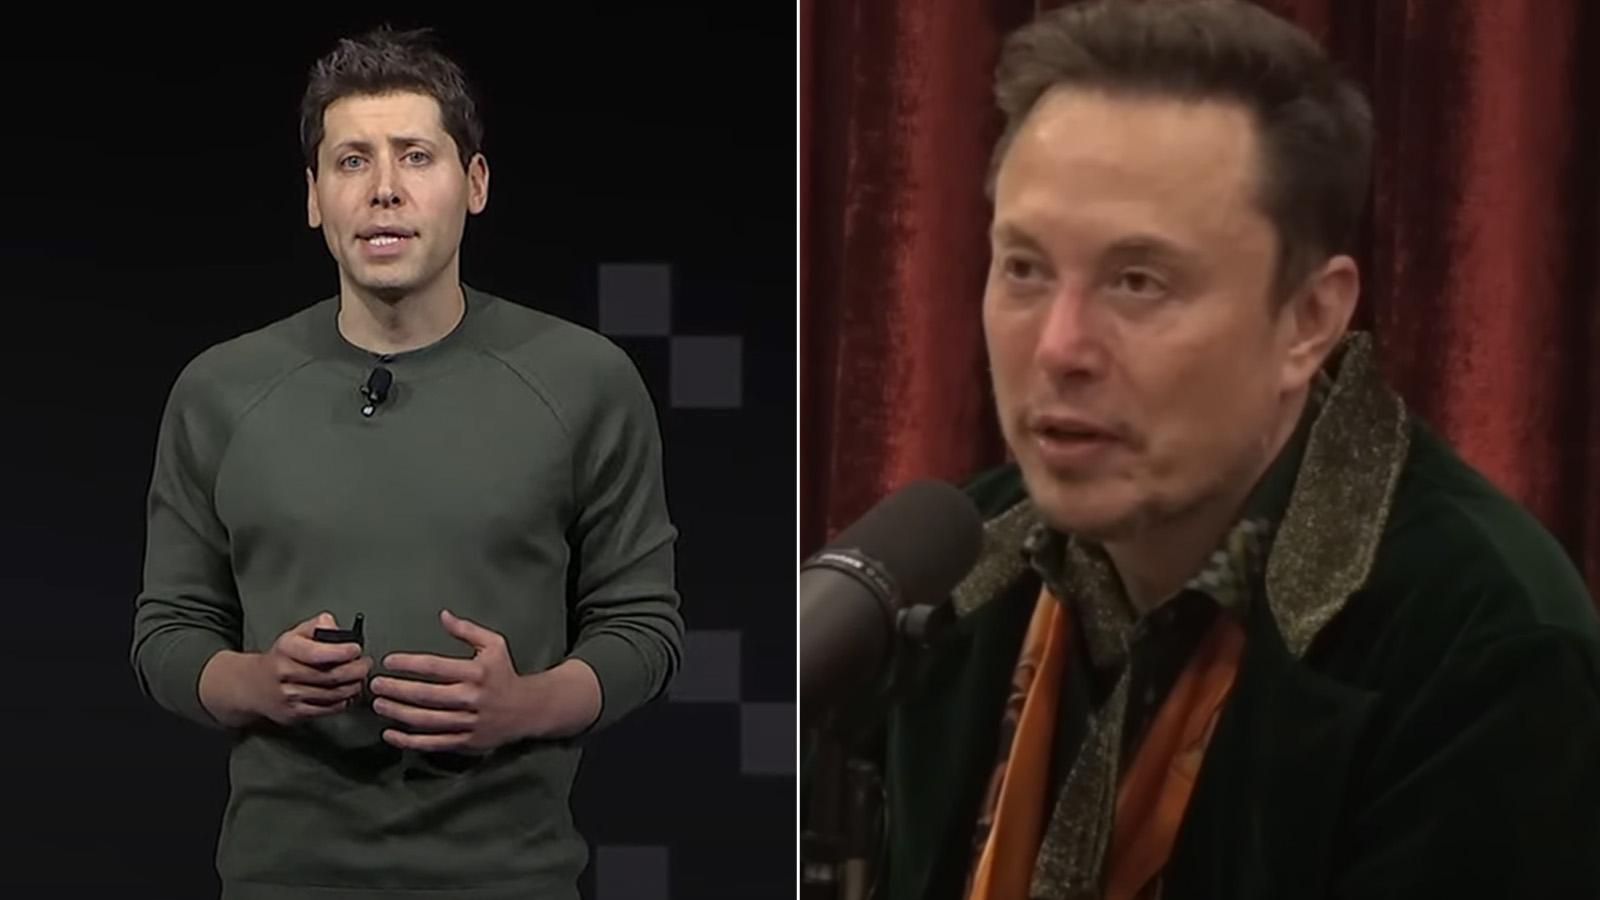 Sam Altman on left, Elon musk on Right